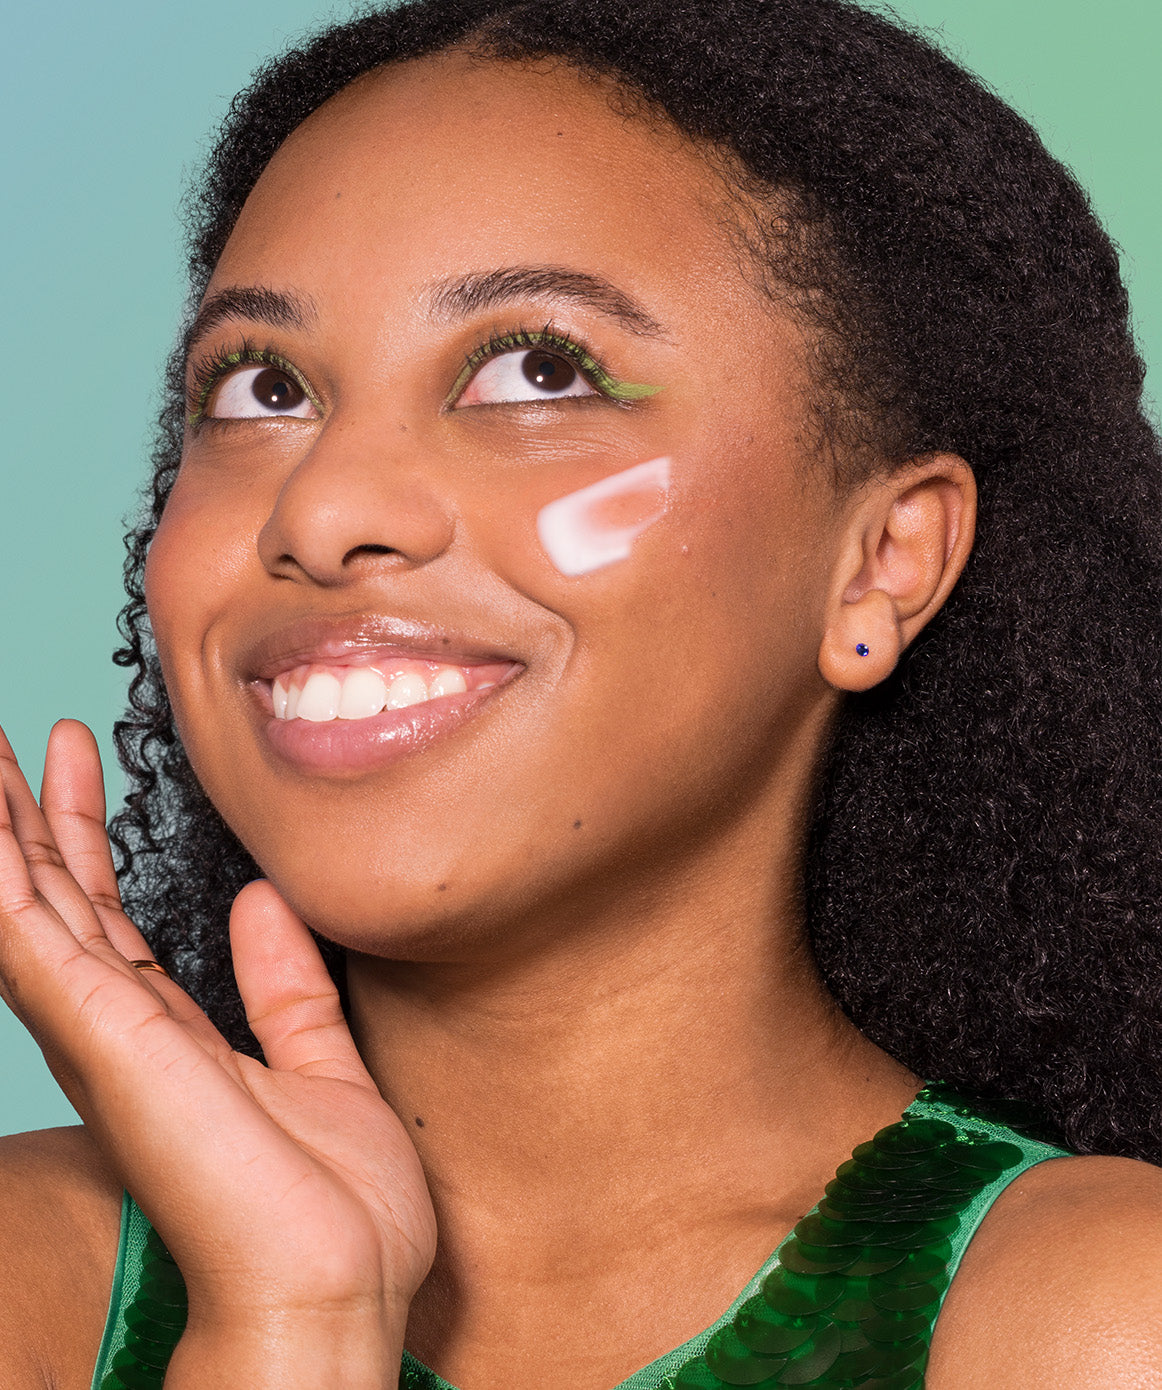  Bubble Skincare Level Up Balancing Gel Moisturizer - Zinc PCA,  Niacinamide + Yarrow Extract Improves Texture, Radiance & Restores  Hydration - Shine-Free Face Moisturizer for Acne Prone Skin (50ml) : Beauty